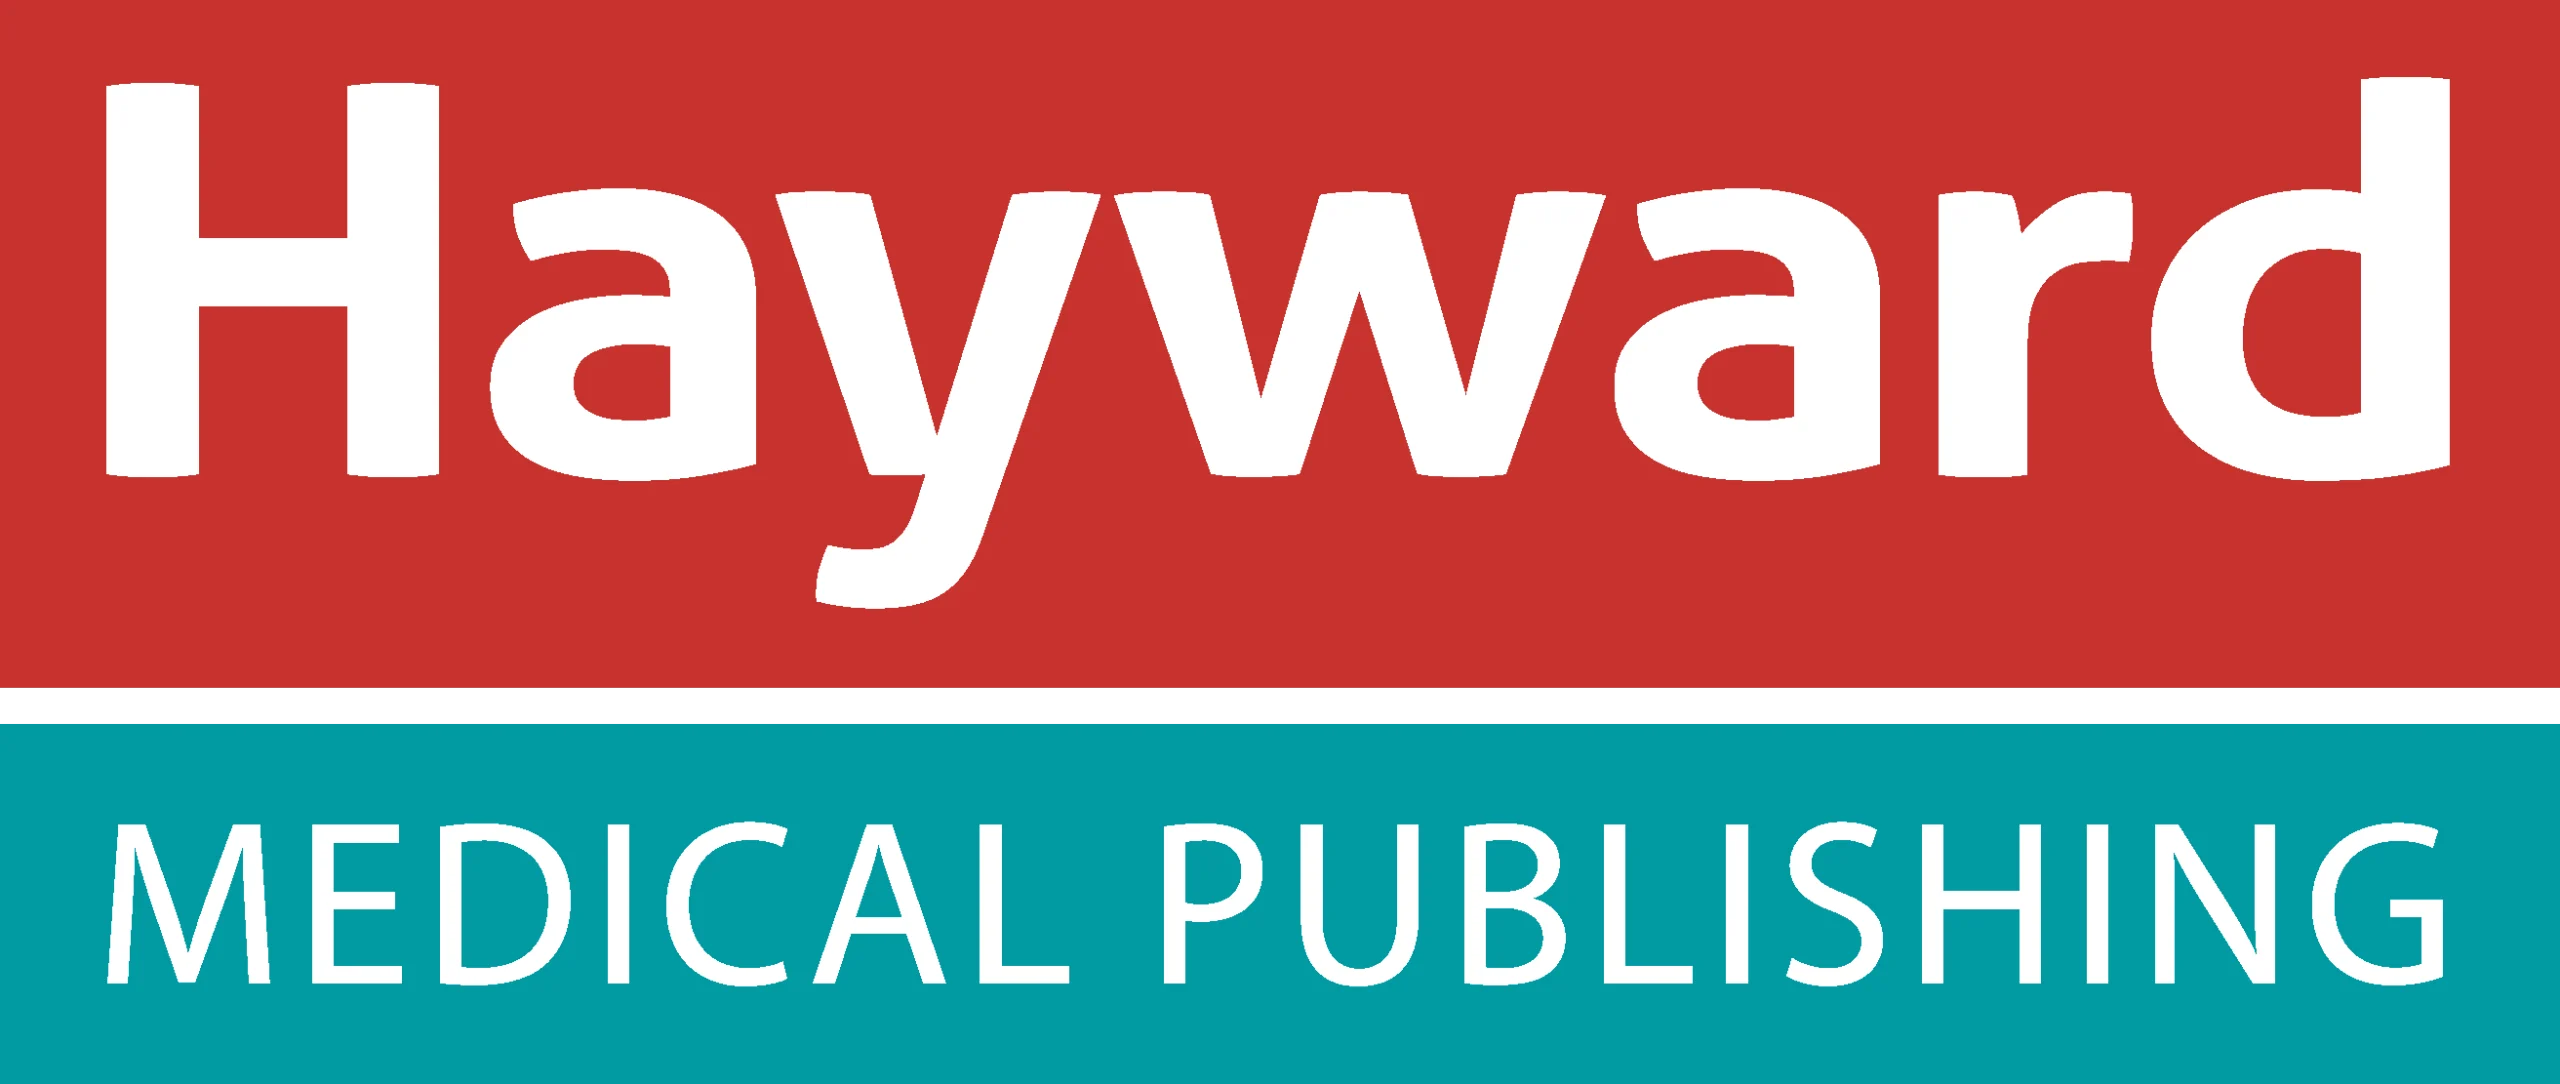 Hayward Medical Publishing